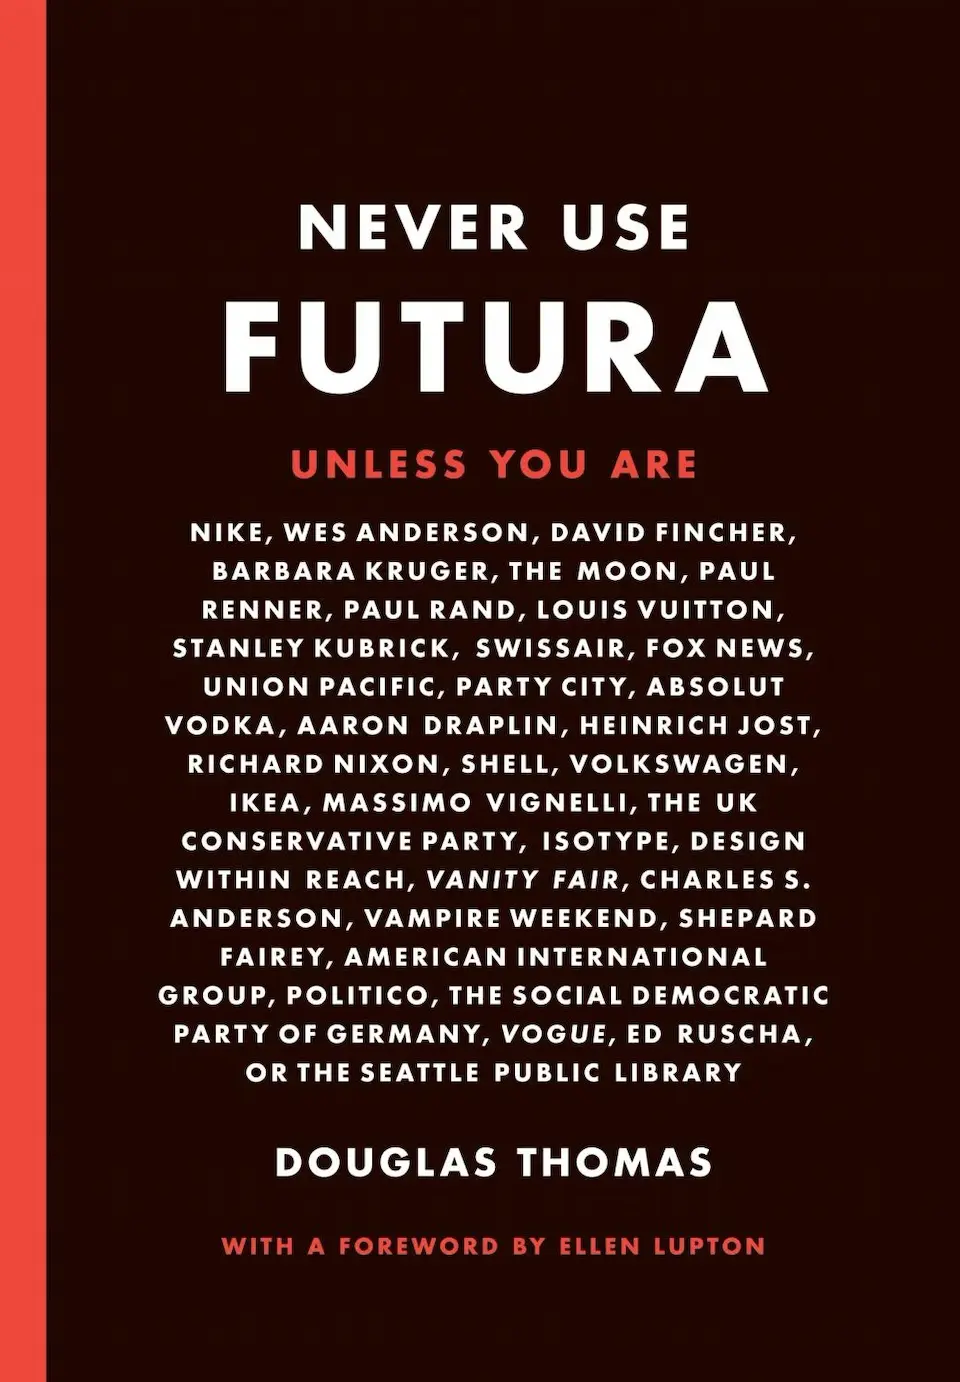 Never Use Futura by Douglas Thomas